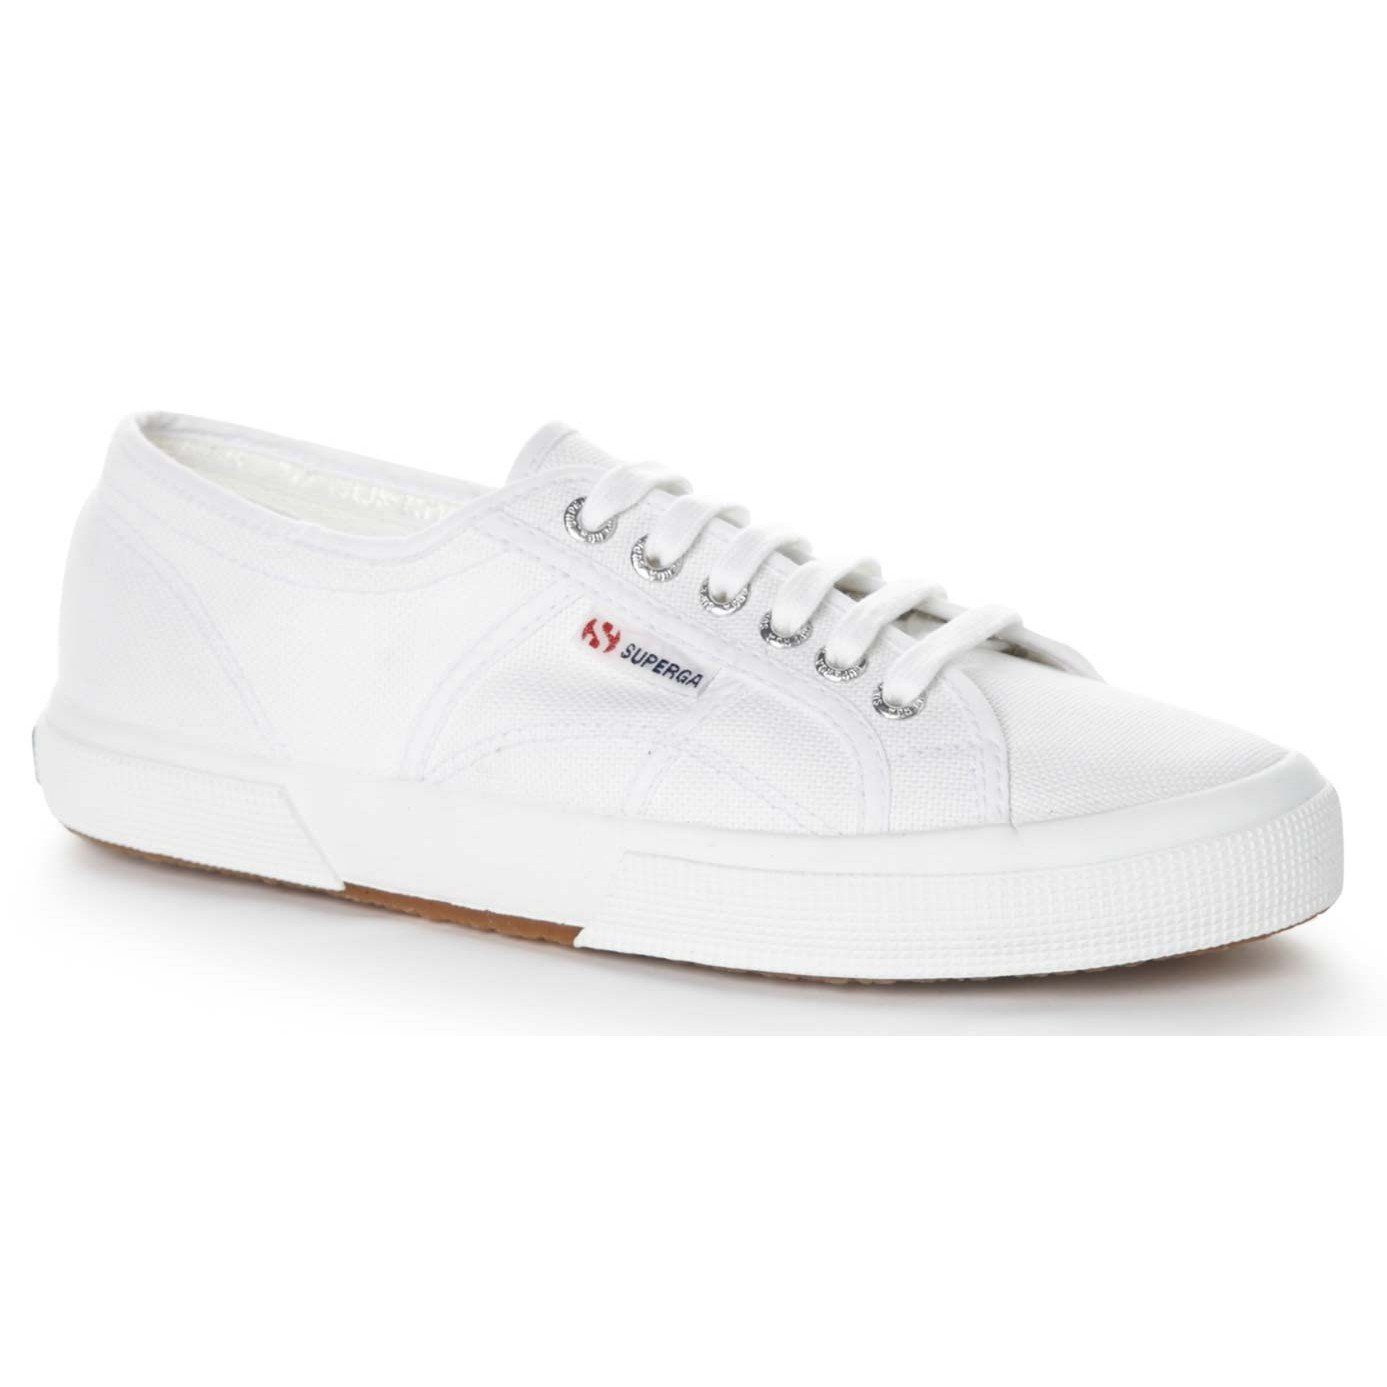 Classic 2750 Sneaker white S000010 Cotu Superga Superga (19801003)